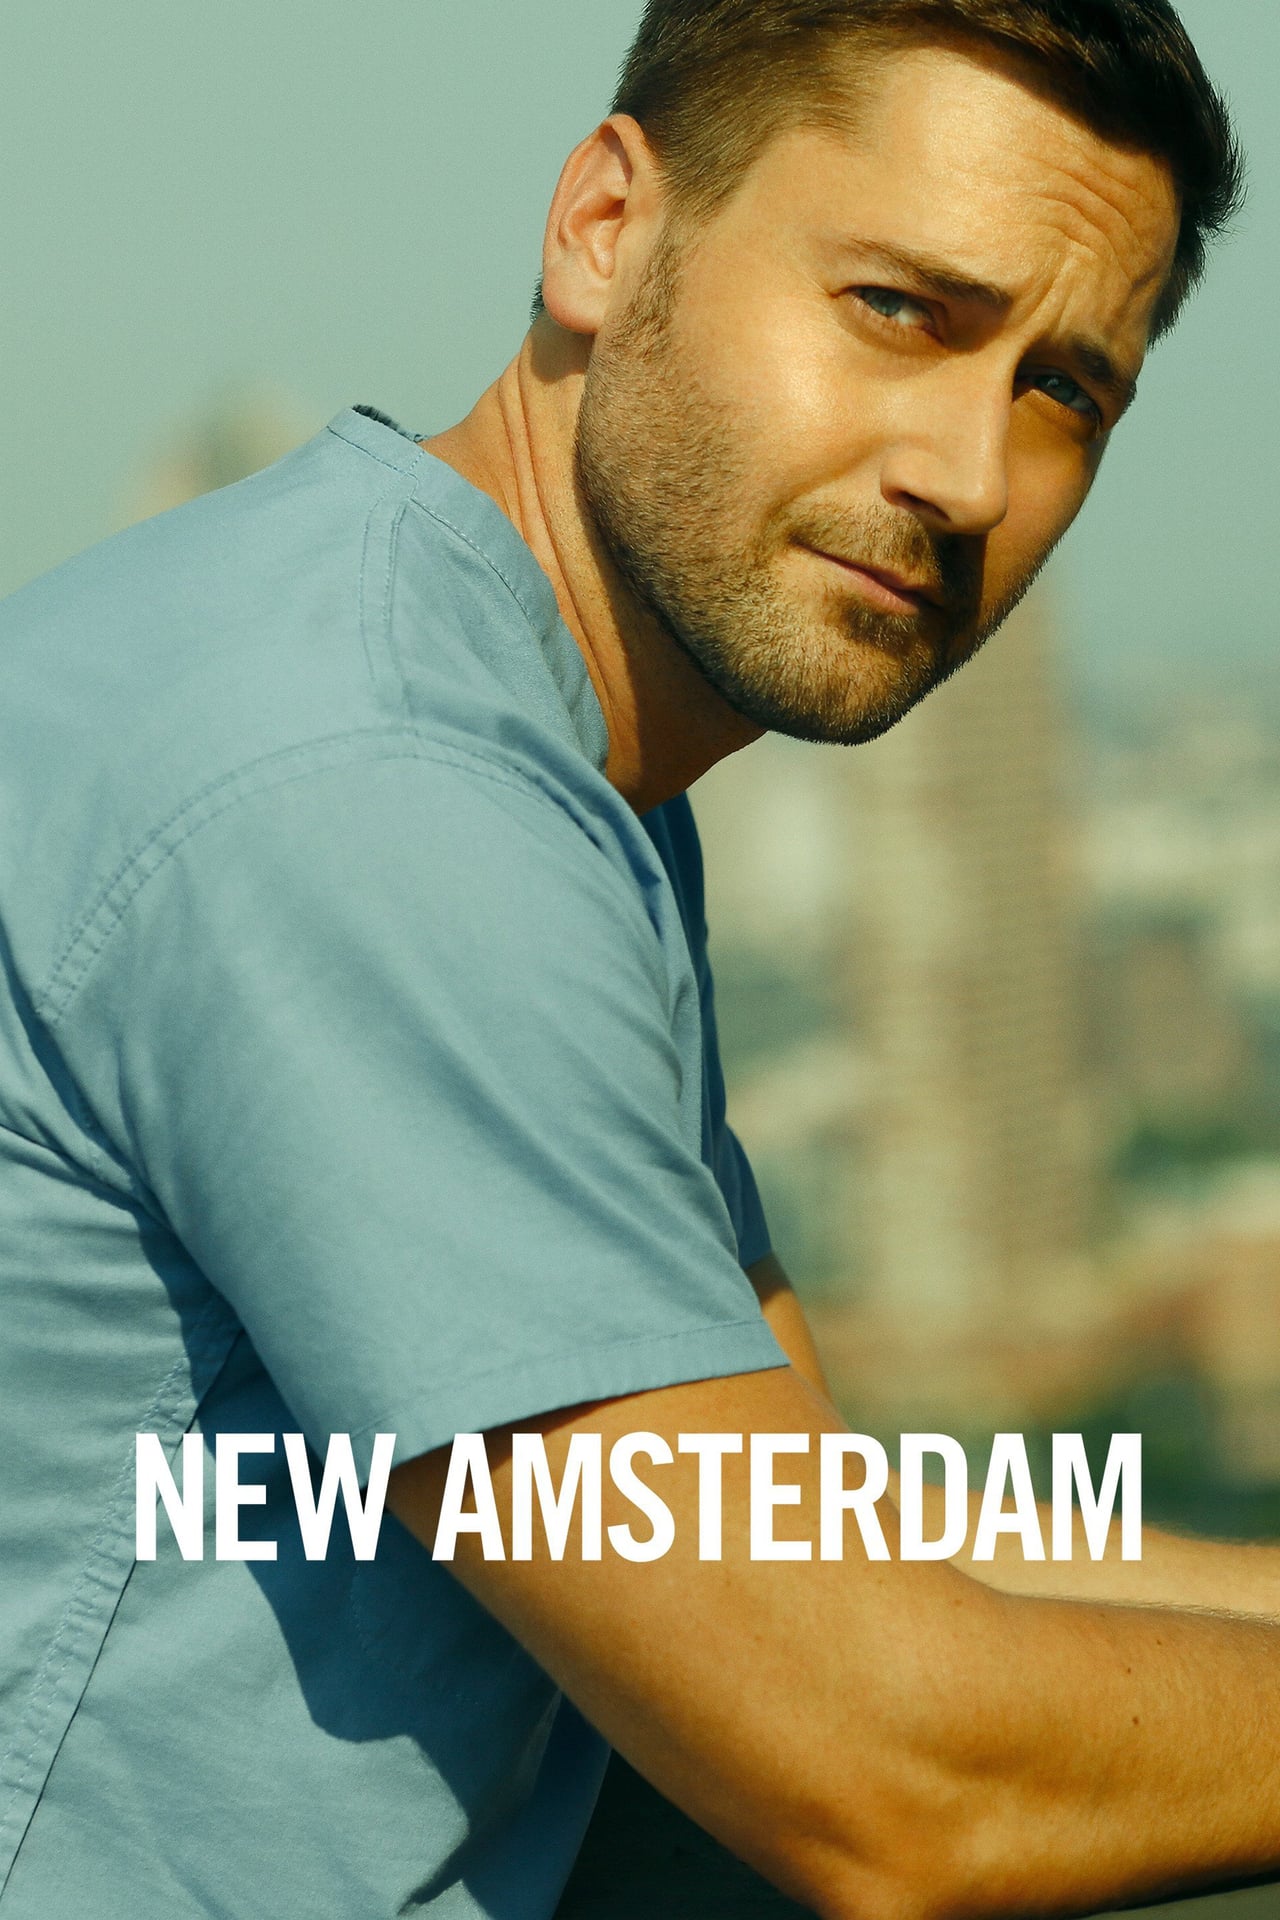 New Amsterdam (season 3)